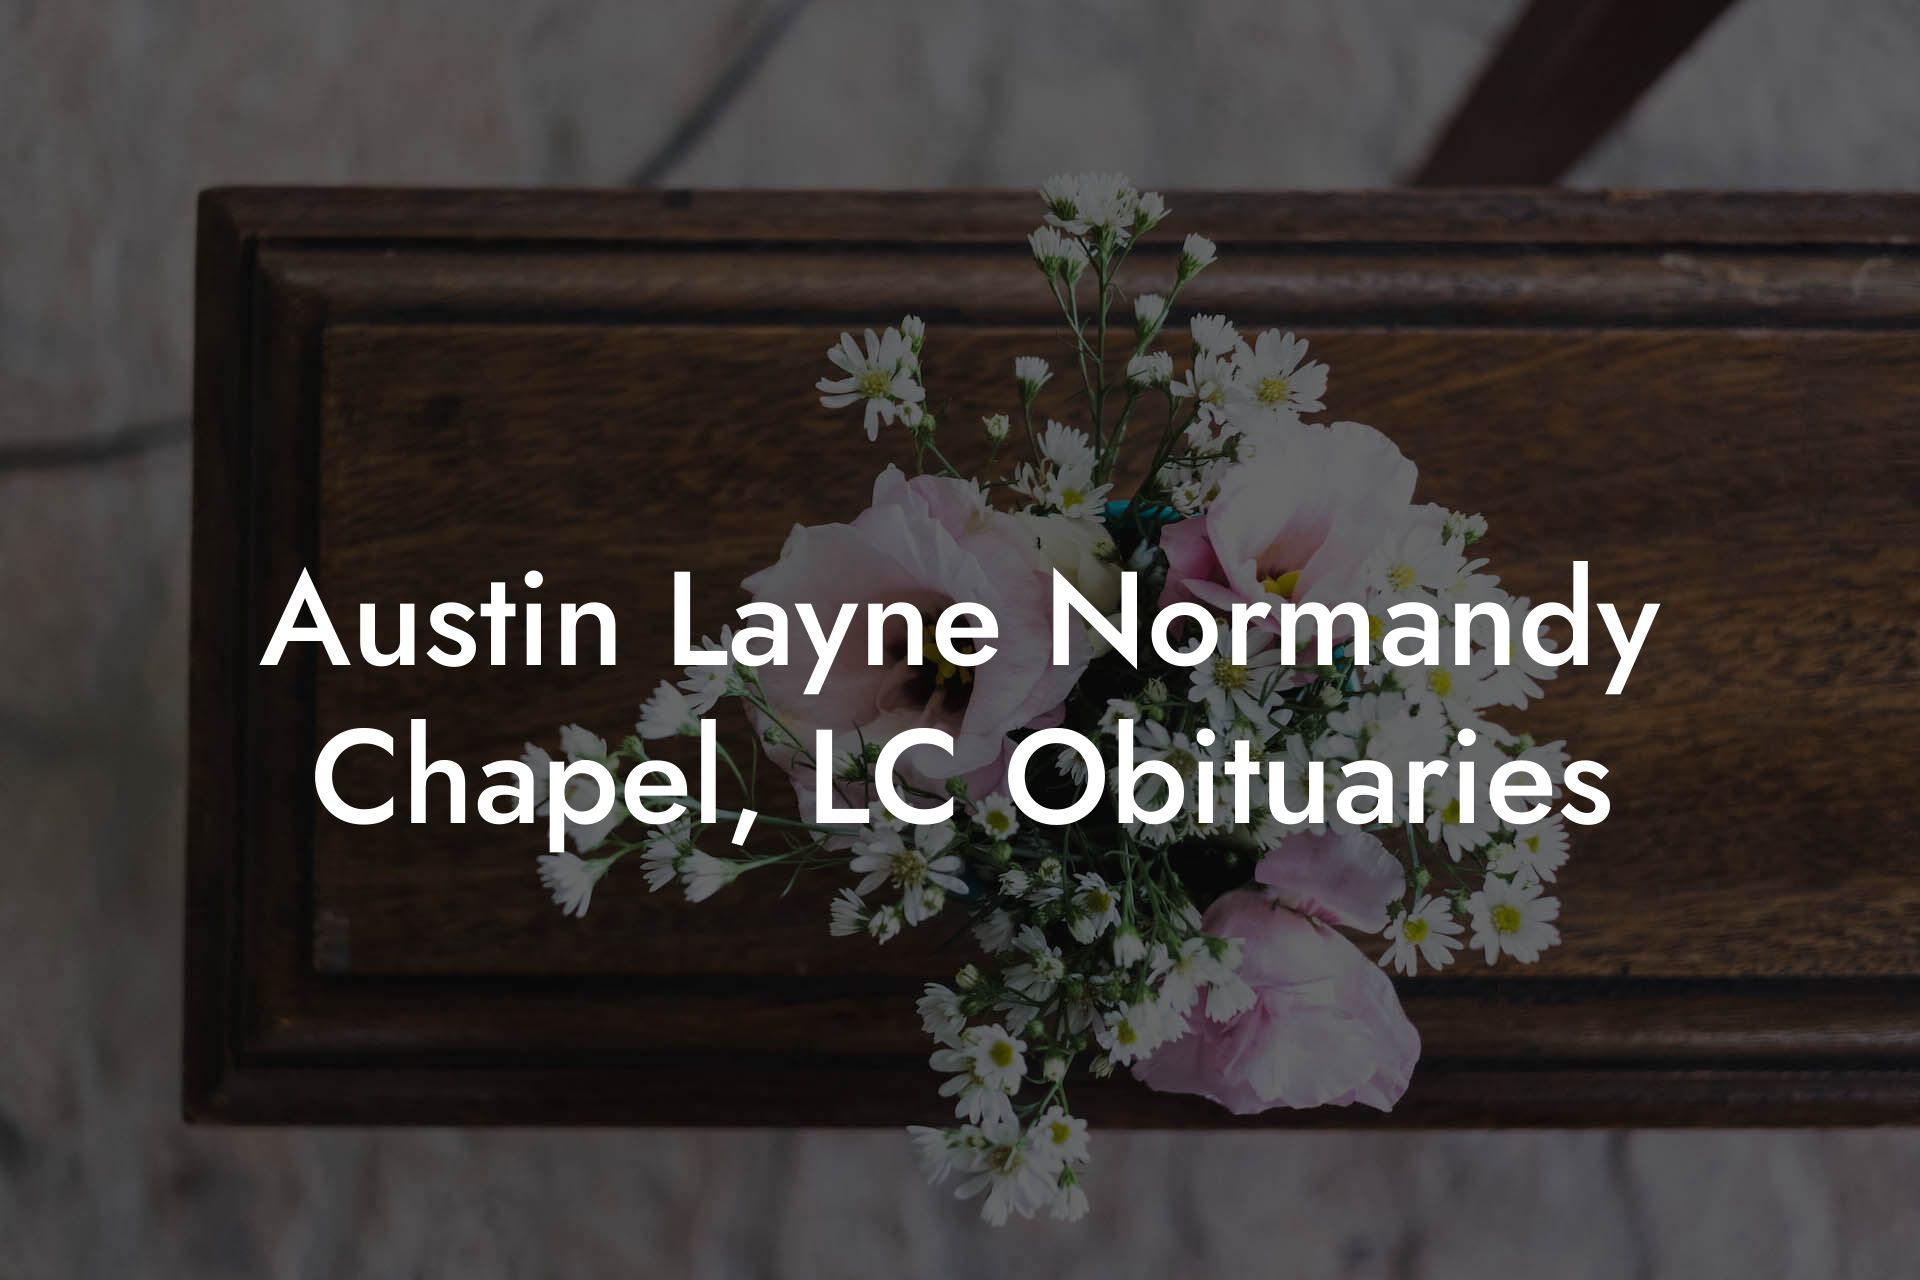 Austin Layne Normandy Chapel, LC Obituaries